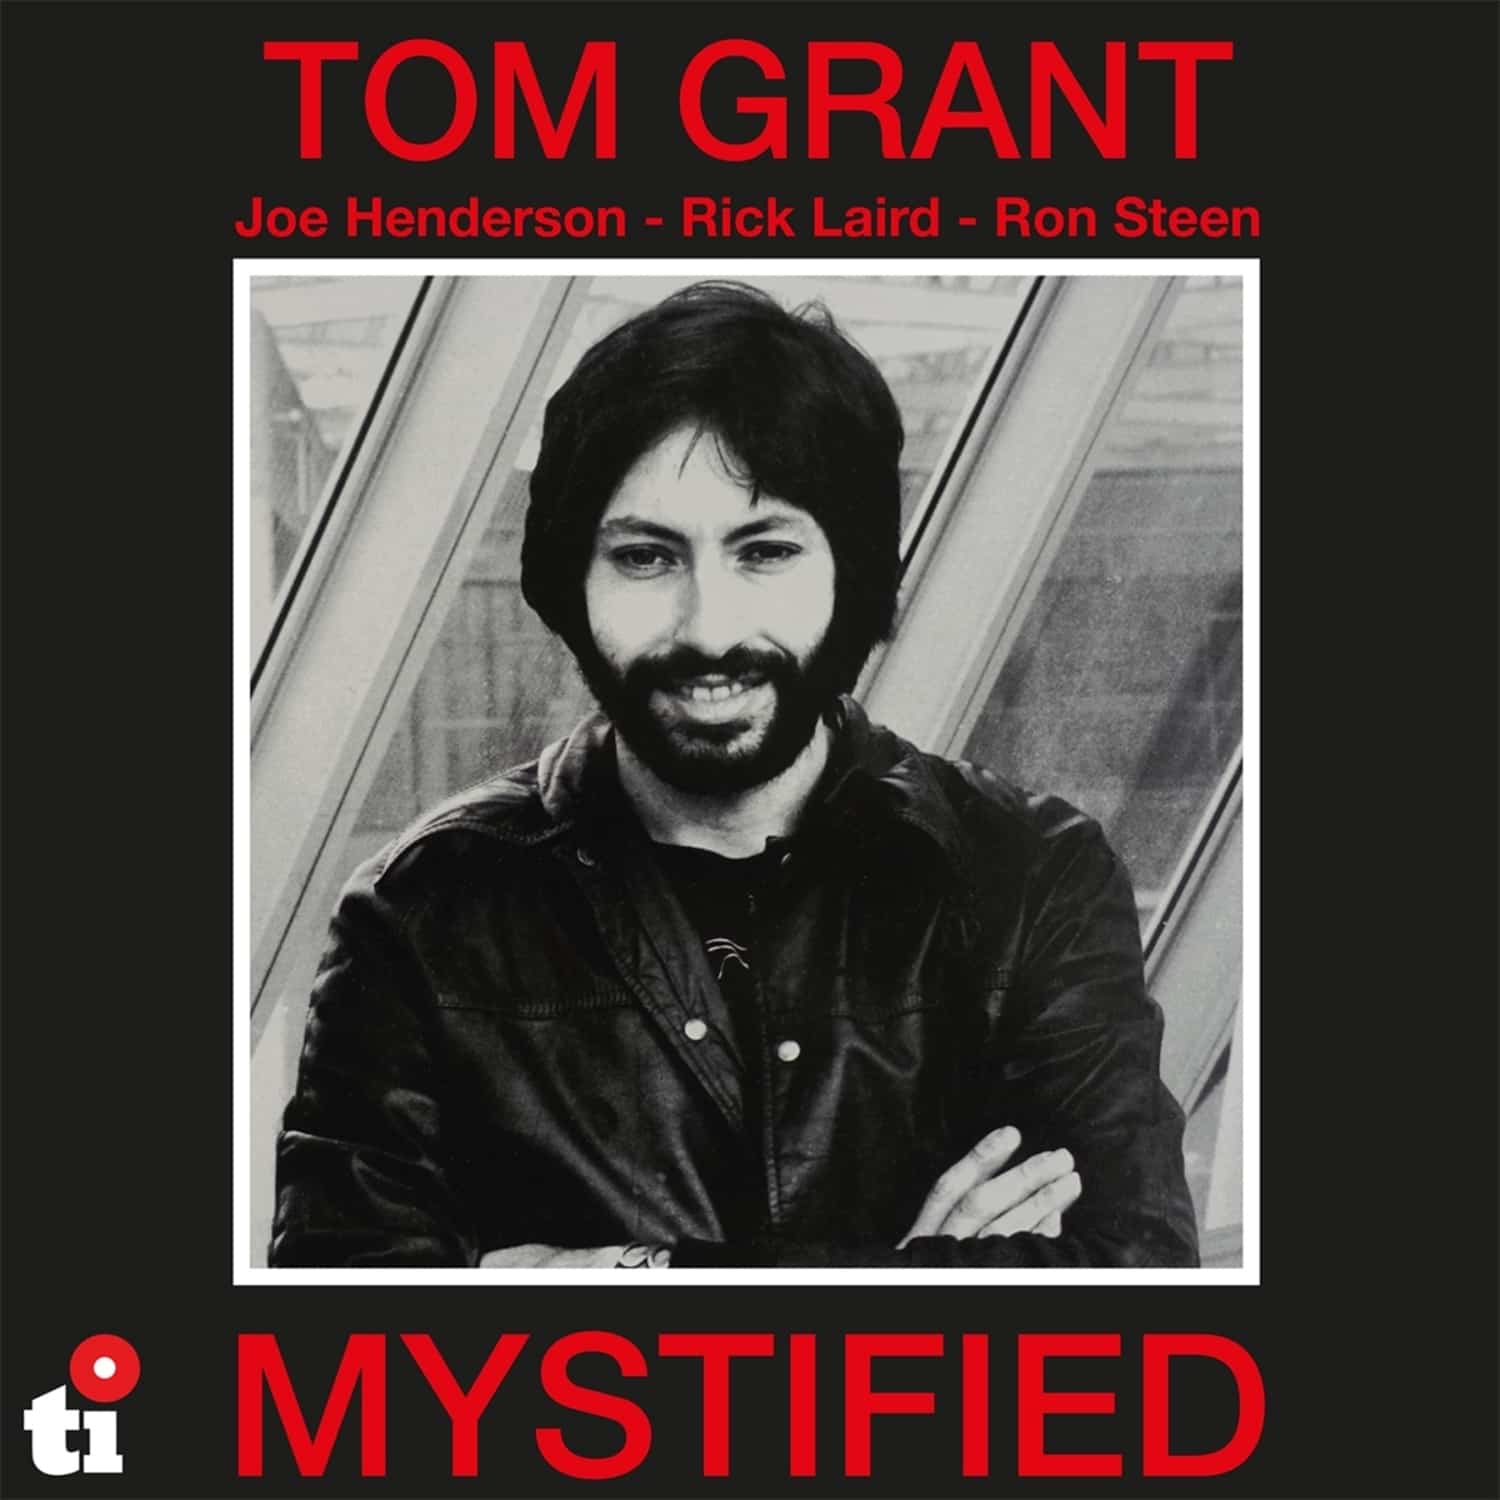  Tom Grant - MYSTIFIED 